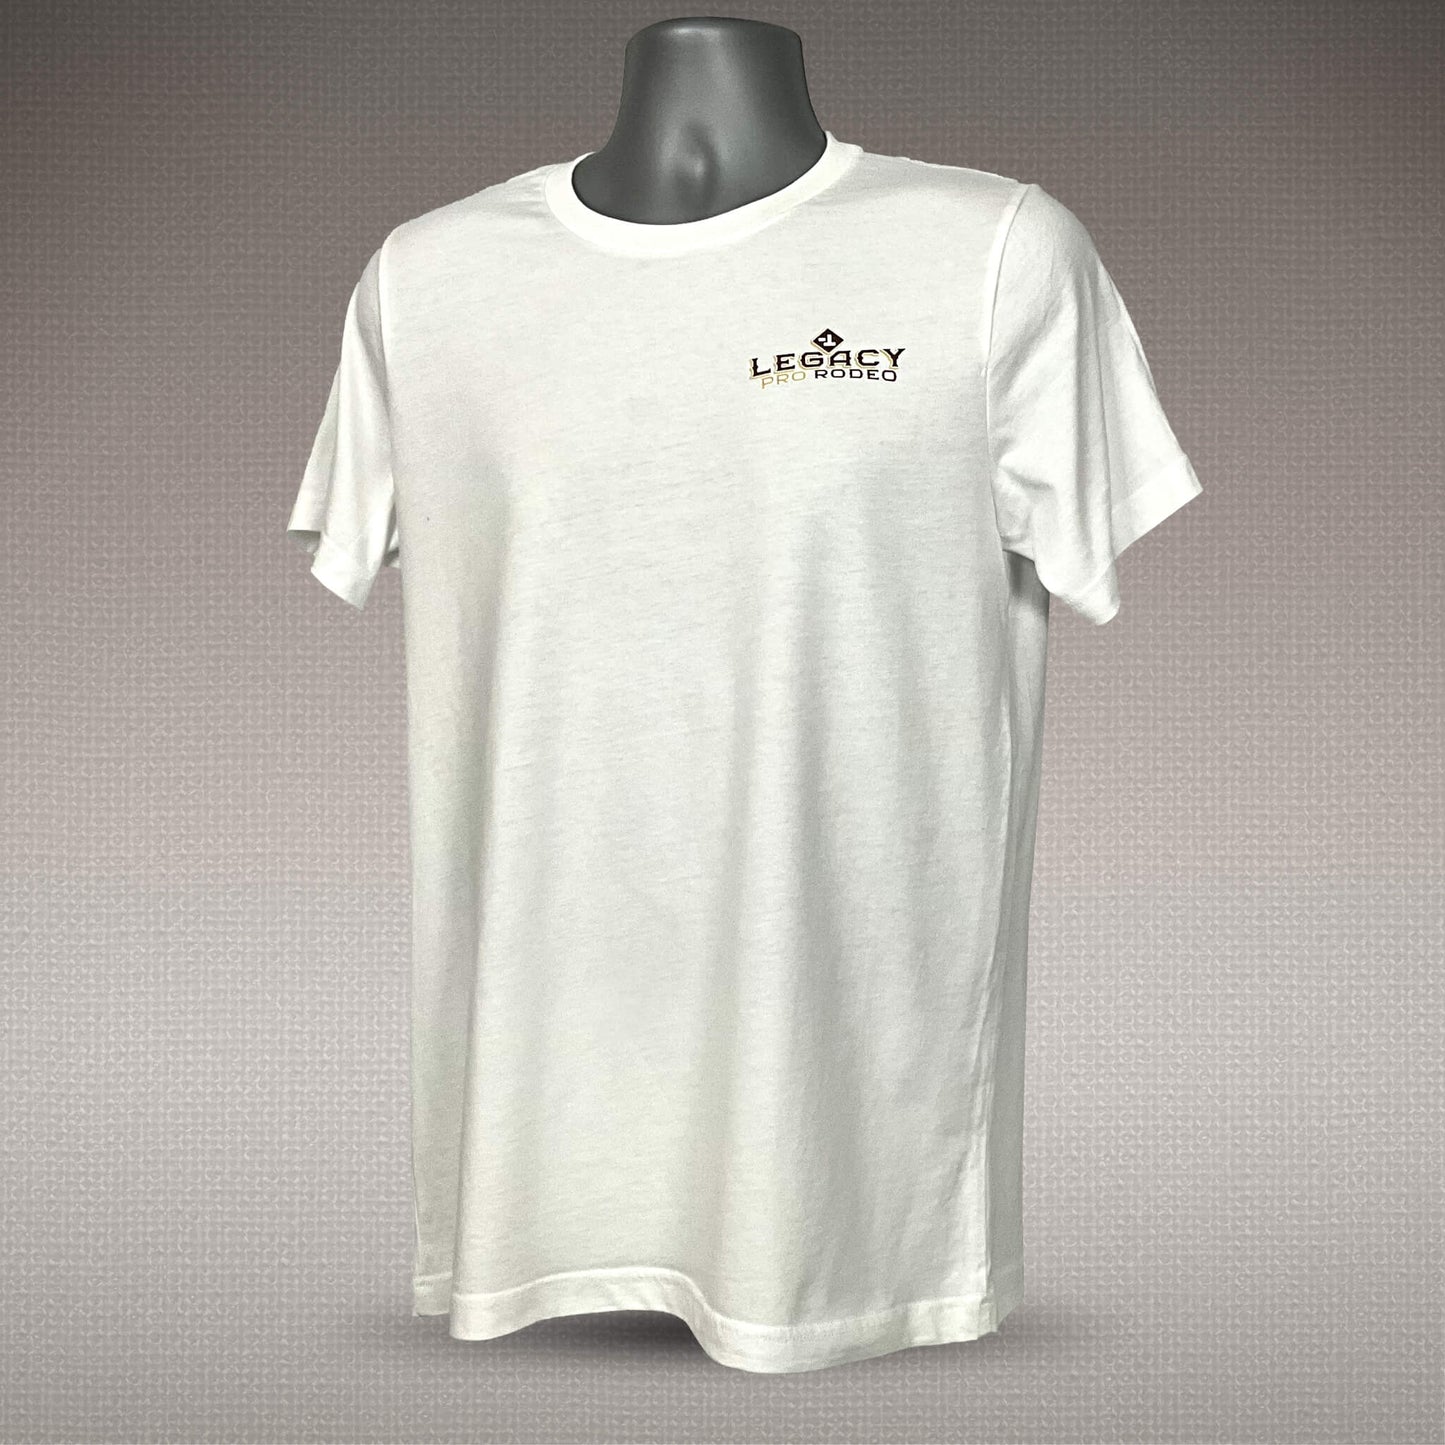 Legacy Pro T-Shirts